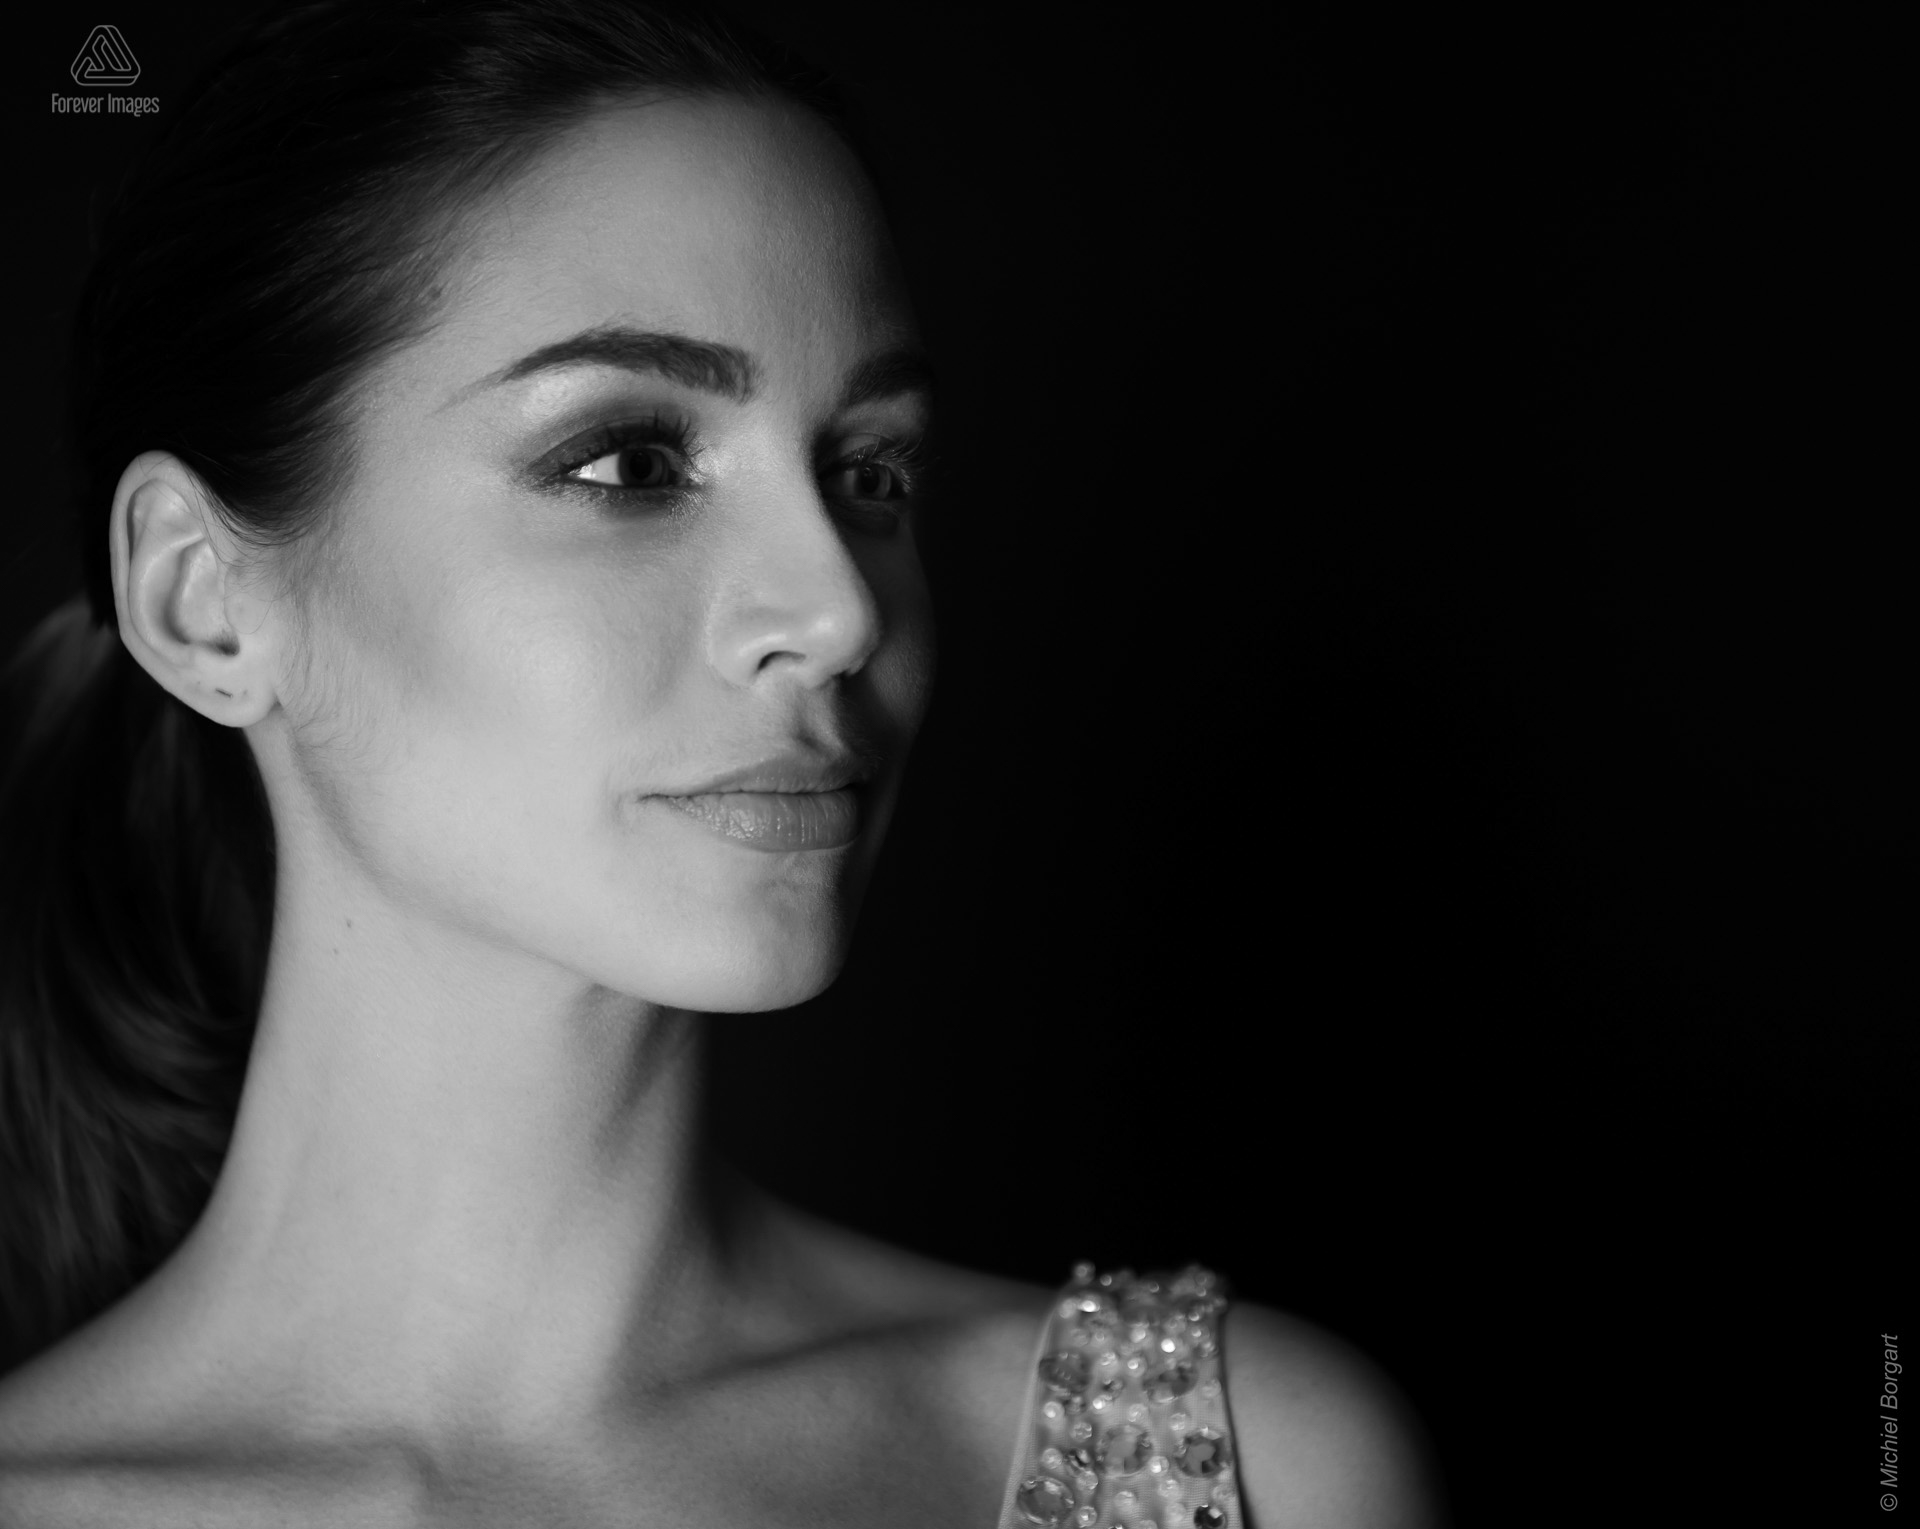 Fashionfoto zwart-wit krachige blik | Nathalie den Dekker Miss Universe World Netherlands International | Fashionfotograaf Michiel Borgart - Forever Images.